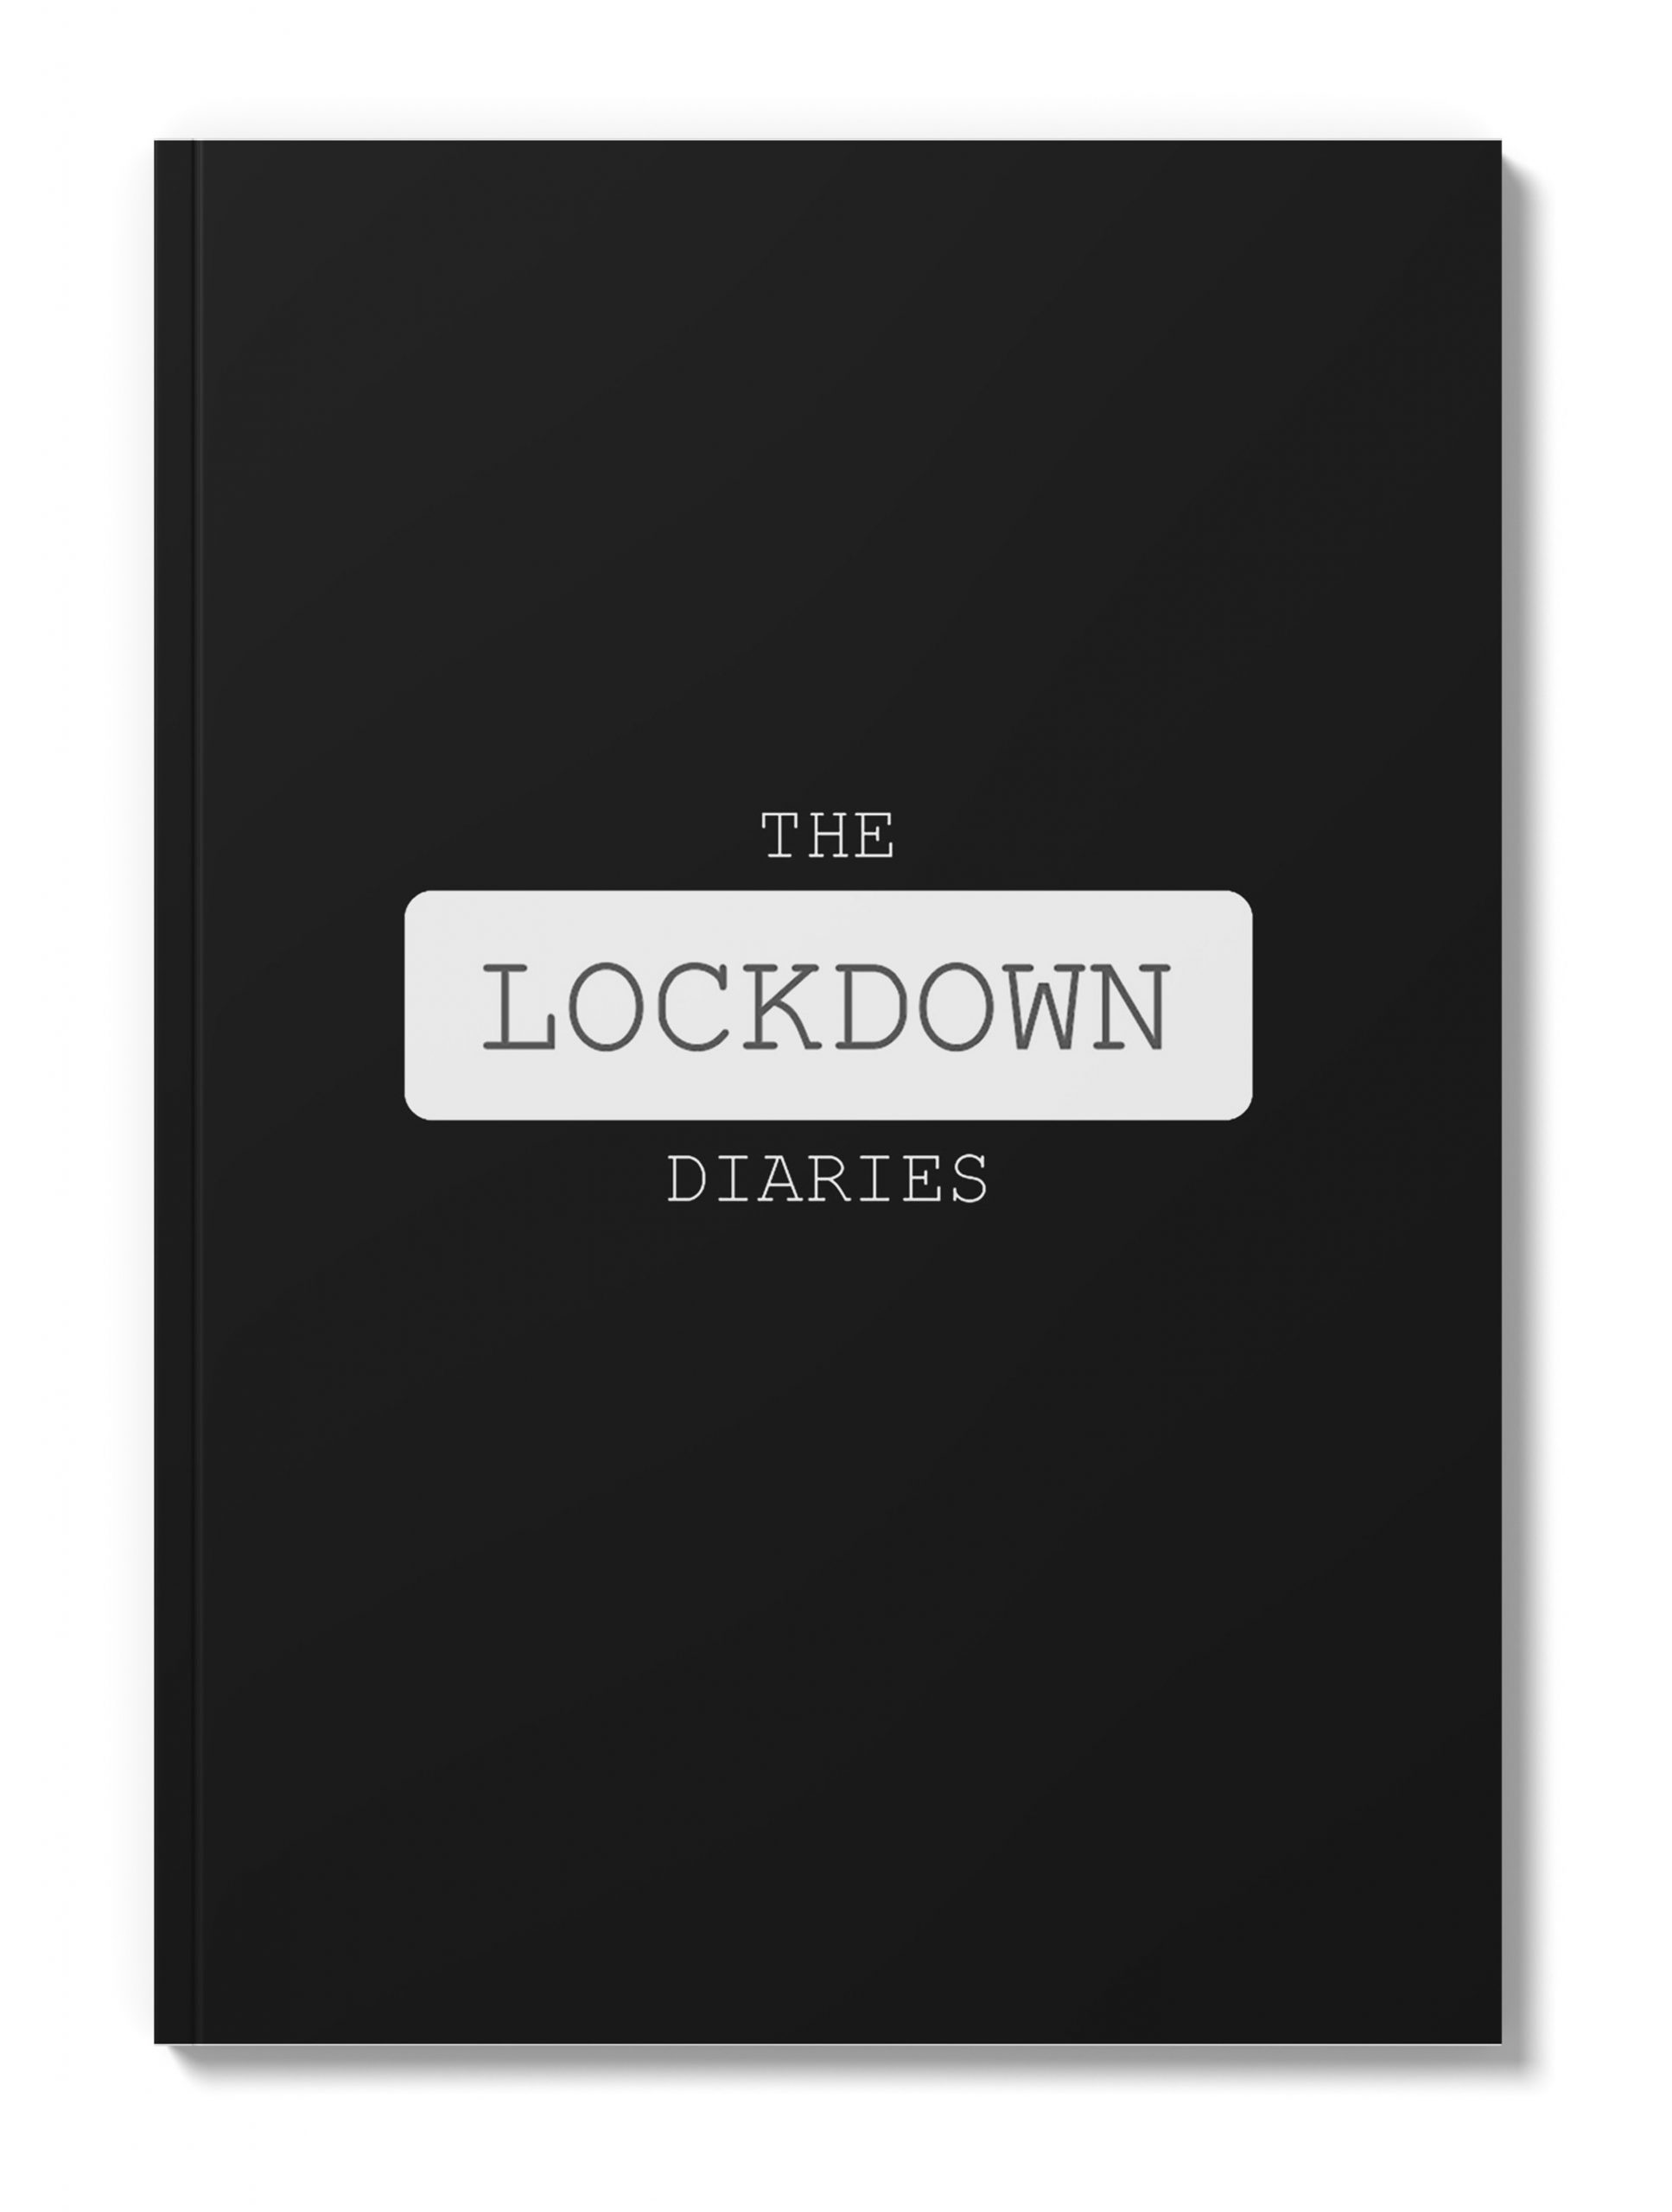 Jones Digital launch The Lockdown Diaries Book – OUT NOW! @FoyneJones_Rec @Seedcharity